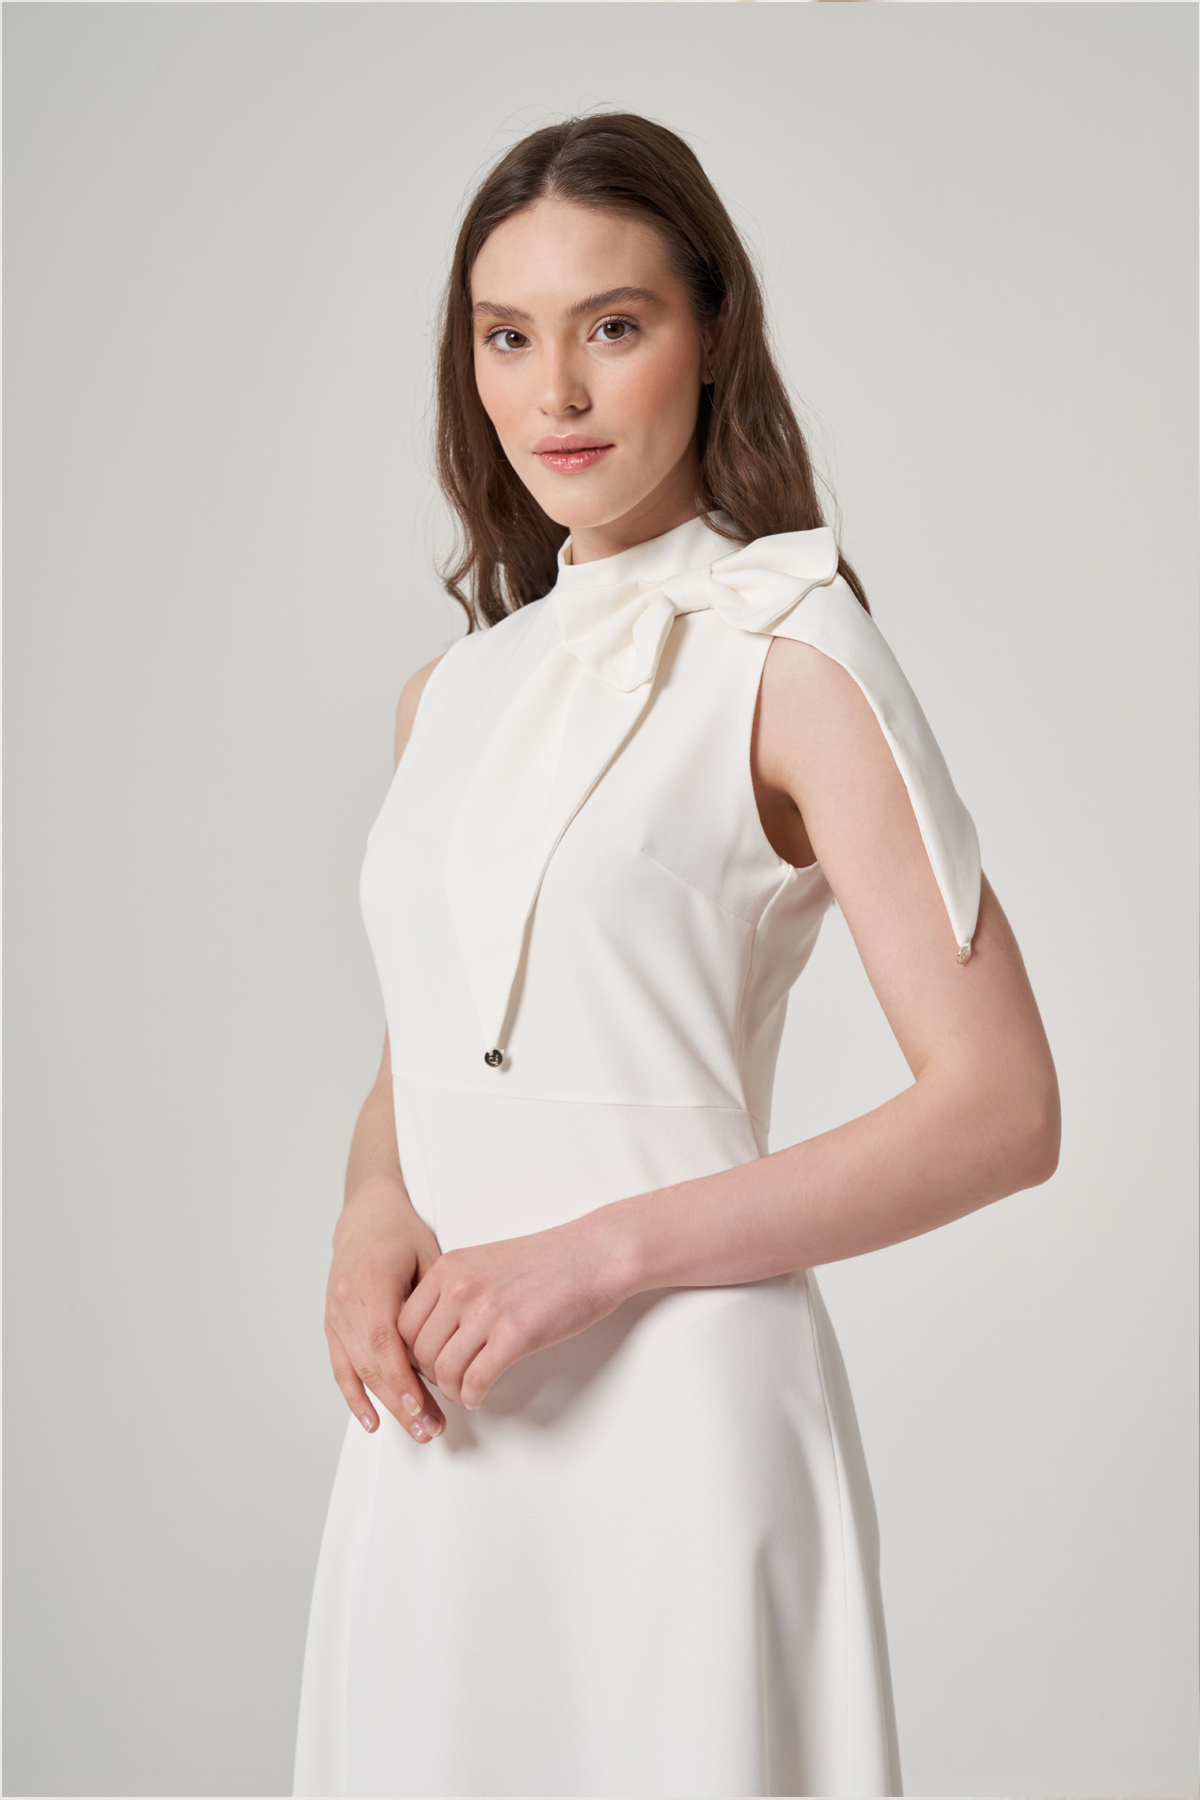 Beyaz Fiyonklu Krep Elbise 2774